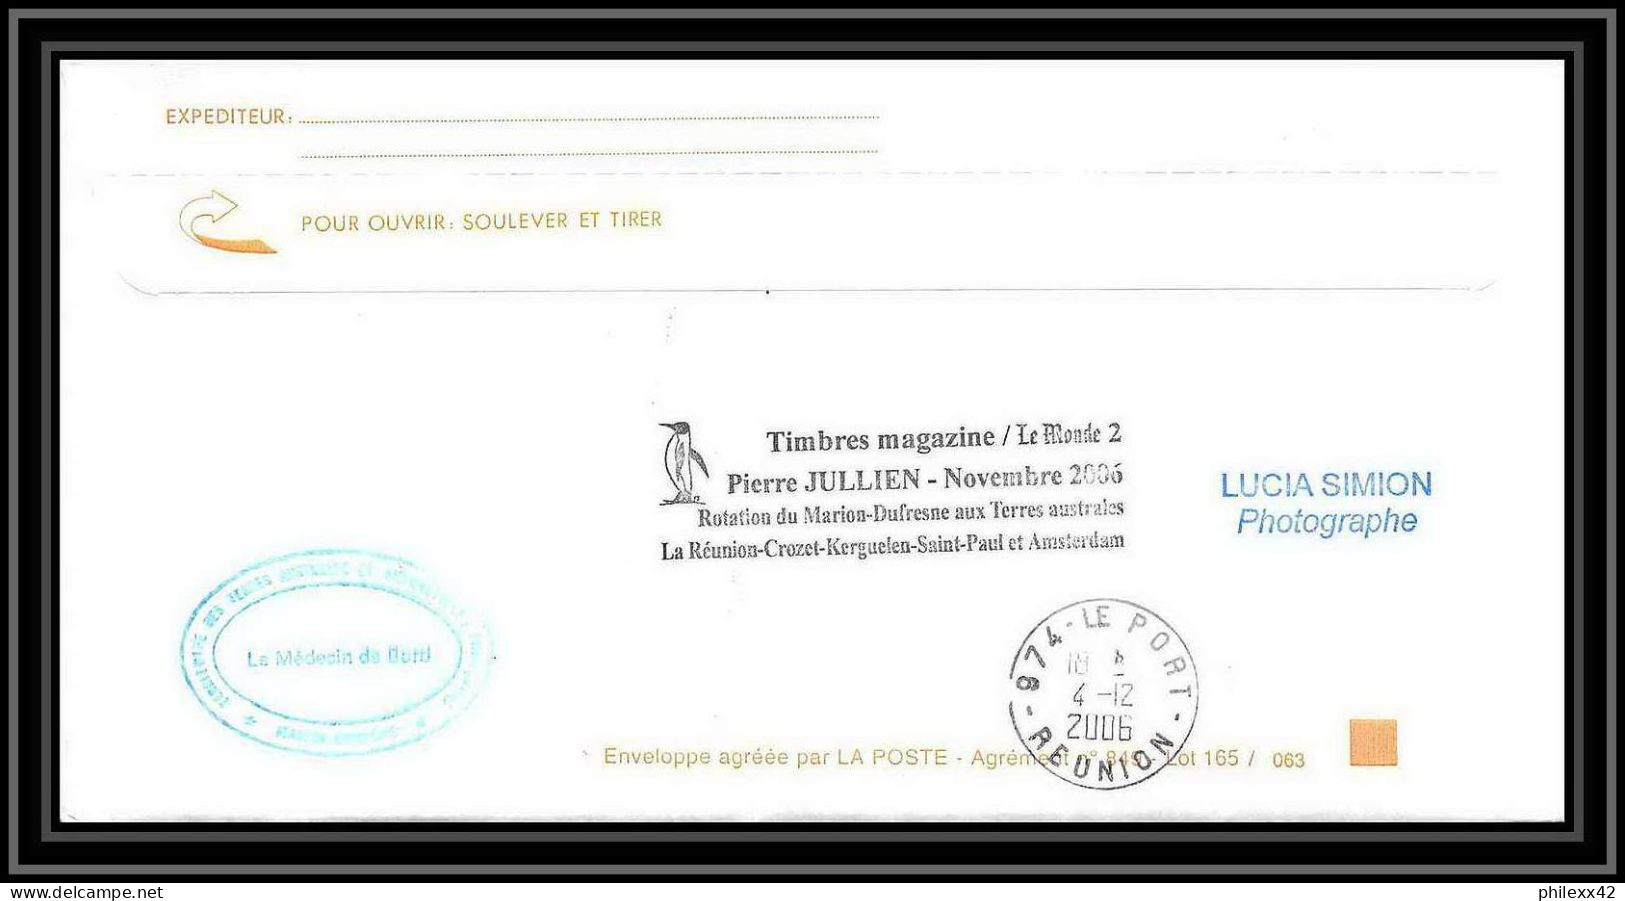 2618 ANTARCTIC Terres Australes TAAF Lettre Cover Dufresne 2 Signé Signed Op 2006/3 N°442 23/11/2006 St Paul - Expediciones Antárticas